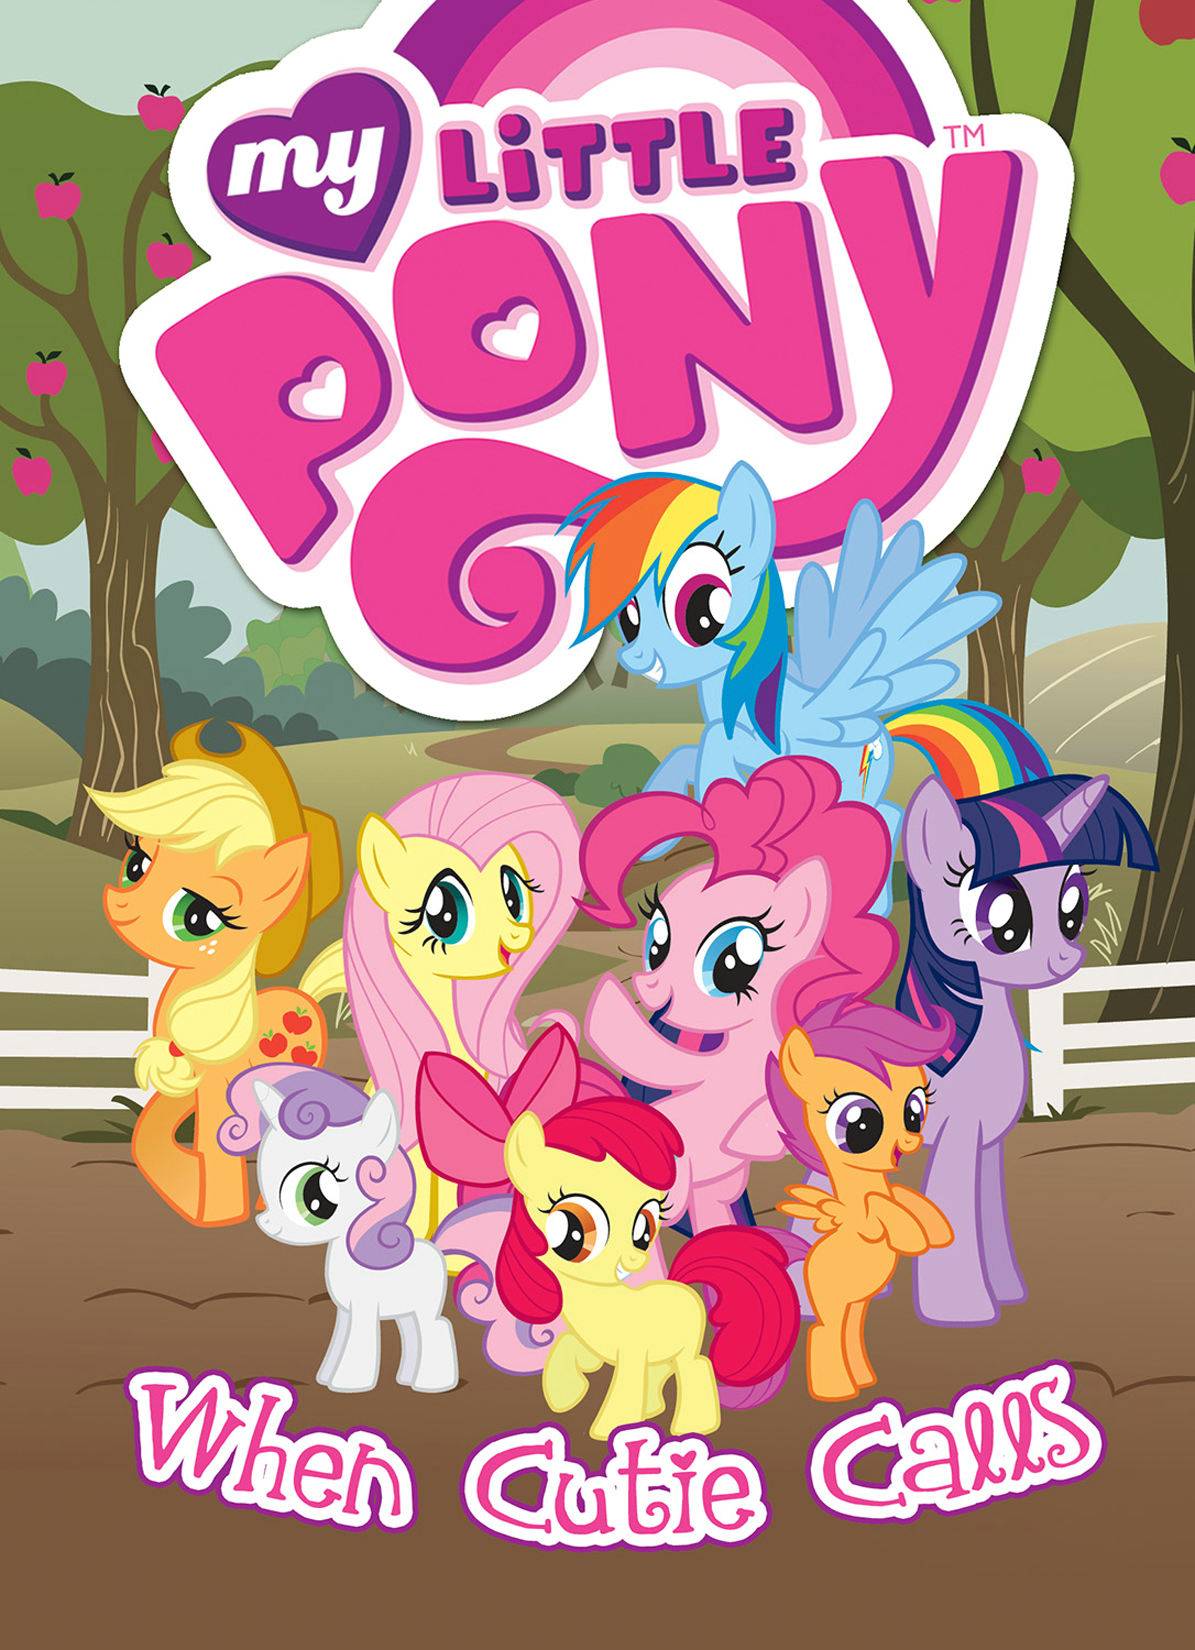 My Little Pony Graphic Novel Volume 2 When Cutie Calls